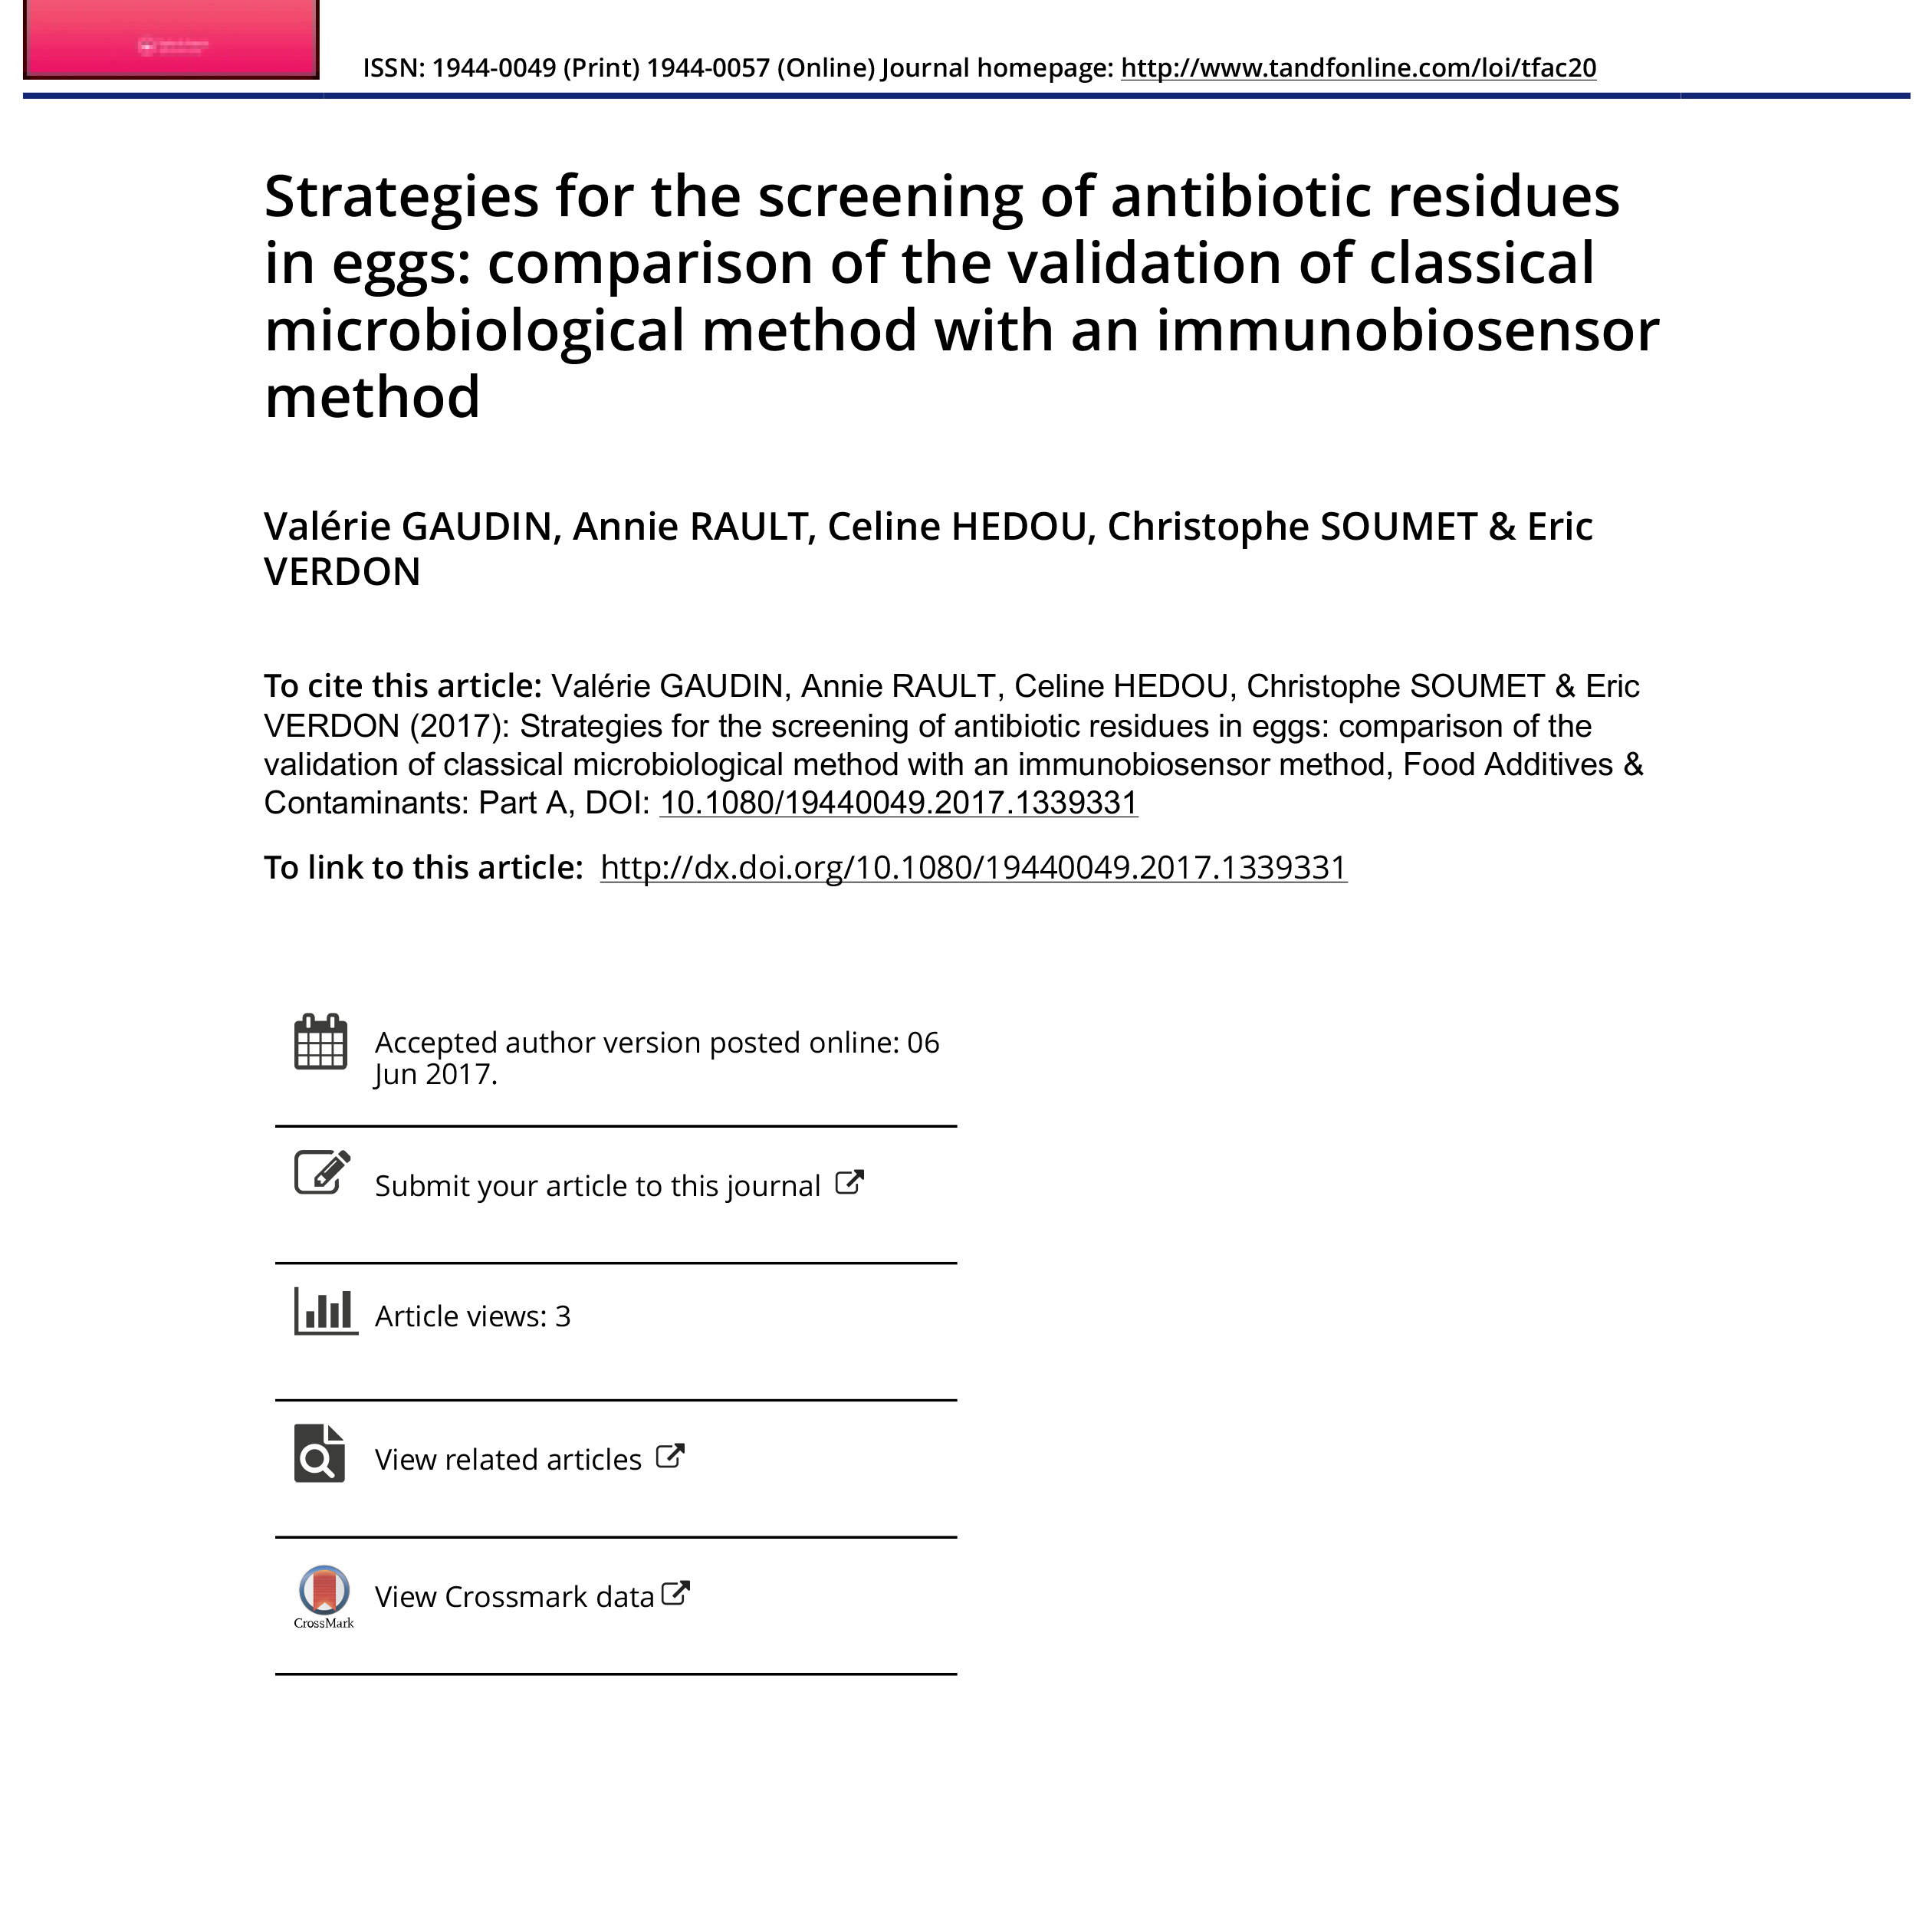 Strategies-for-the-screening-of-antibiotic-residues-in-eggs---V.-GAUDIN-1